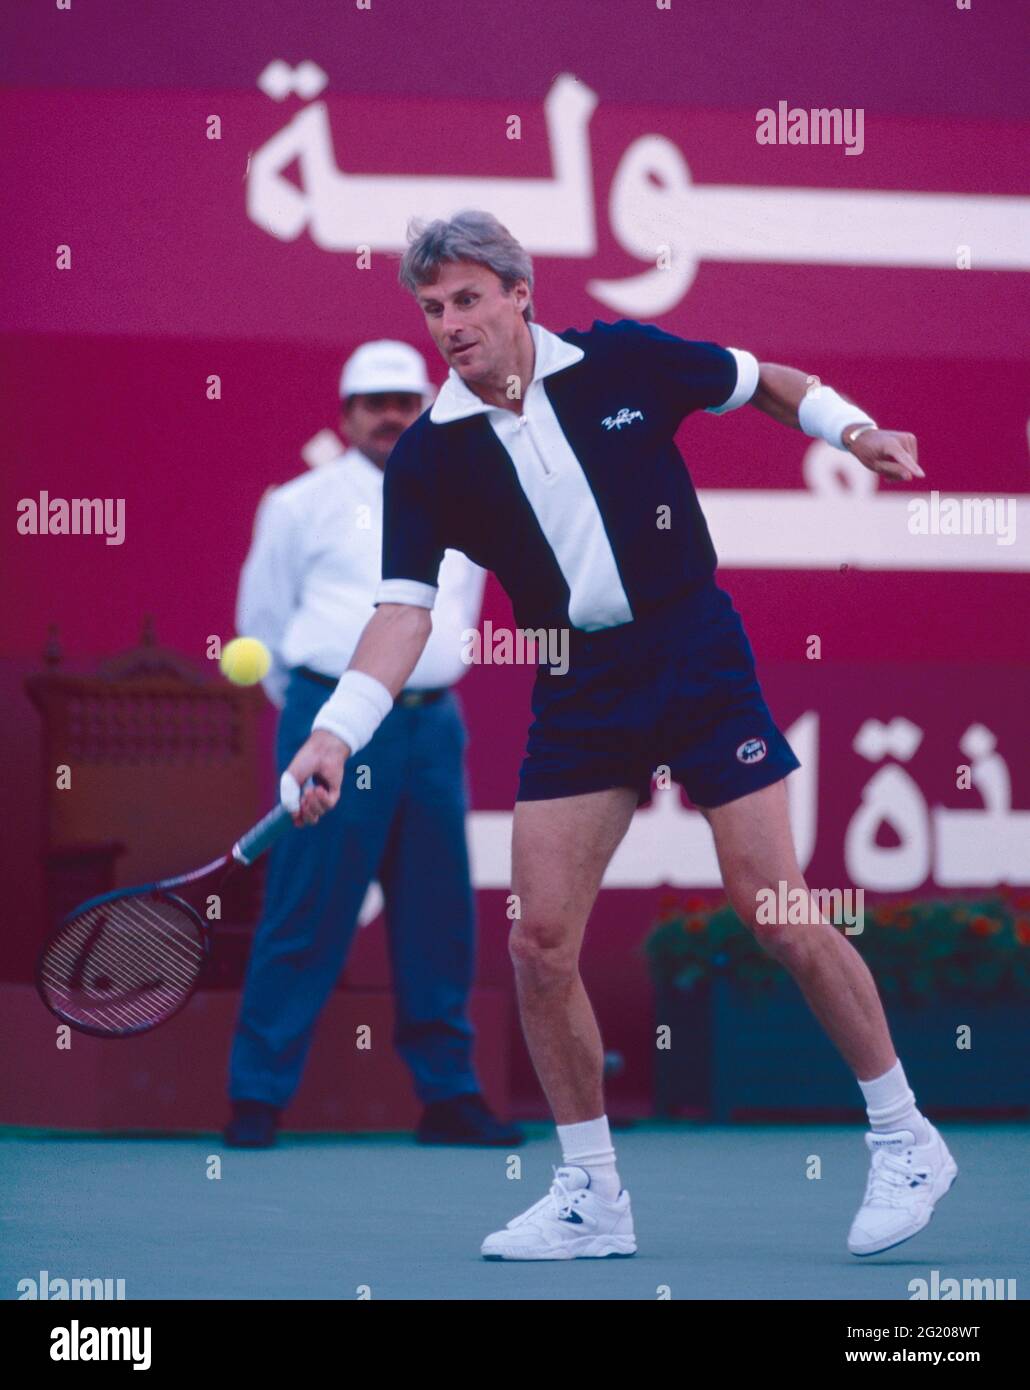 Swedish tennis player Bjorn Borg, Qatar Open 1990s Stock Photo - Alamy